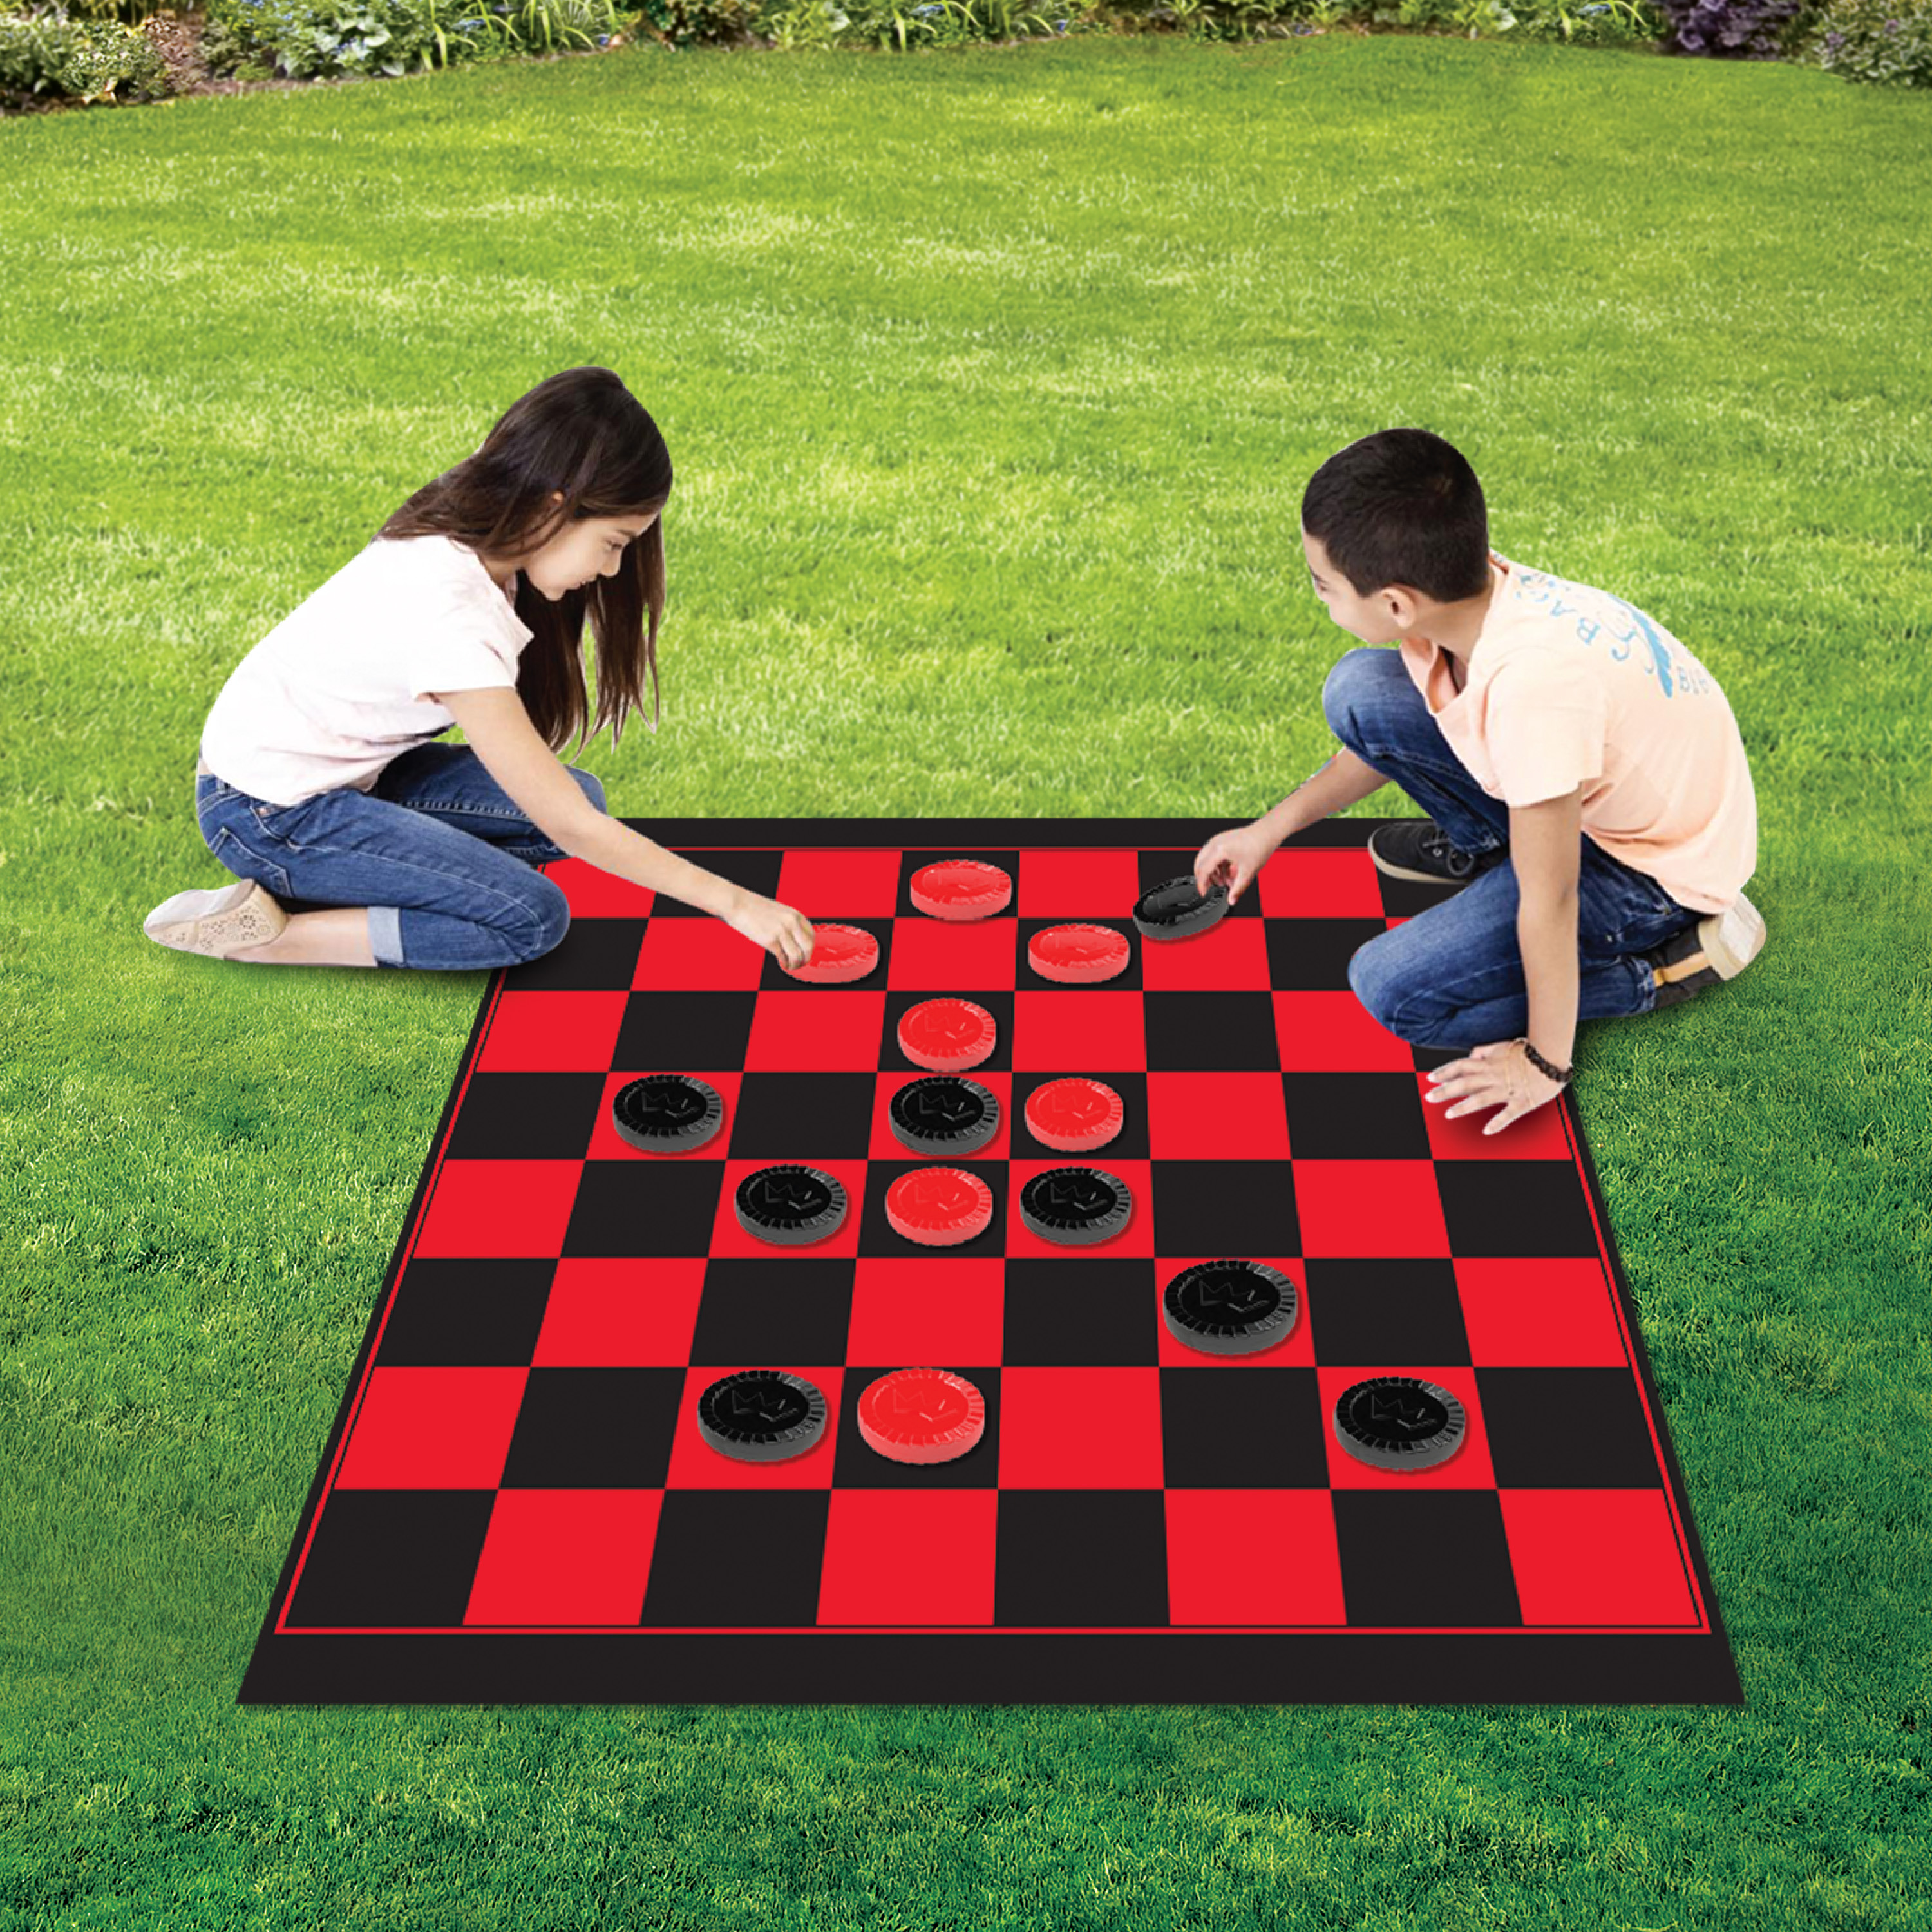 Play Day Jumbo Checkers Classic Game Set - image 4 of 5